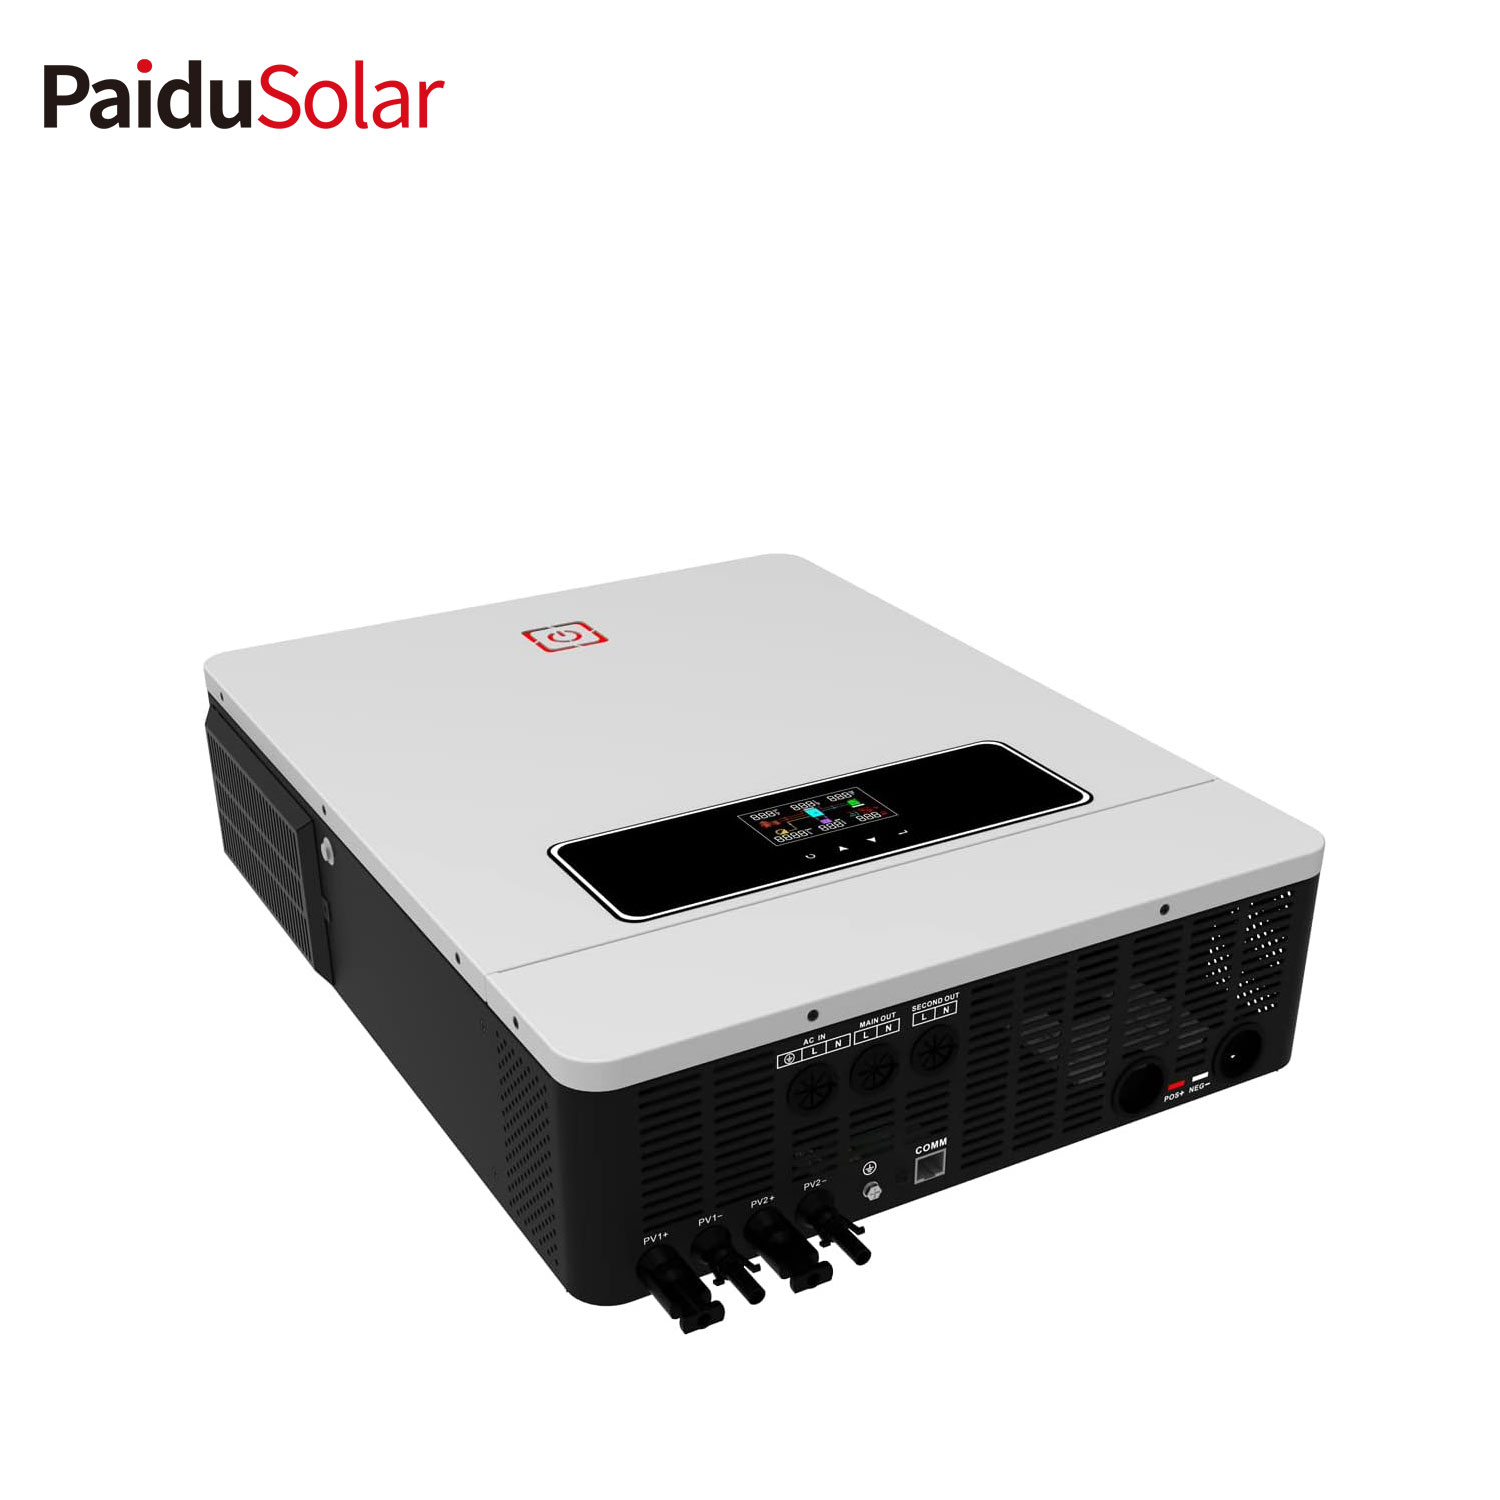 PaiduSolar 8.2KW Hnub Ci Hybrid Inverter Built-in Charge Controller Thiab Ntshiab Sine Wave Inverter Rau ...